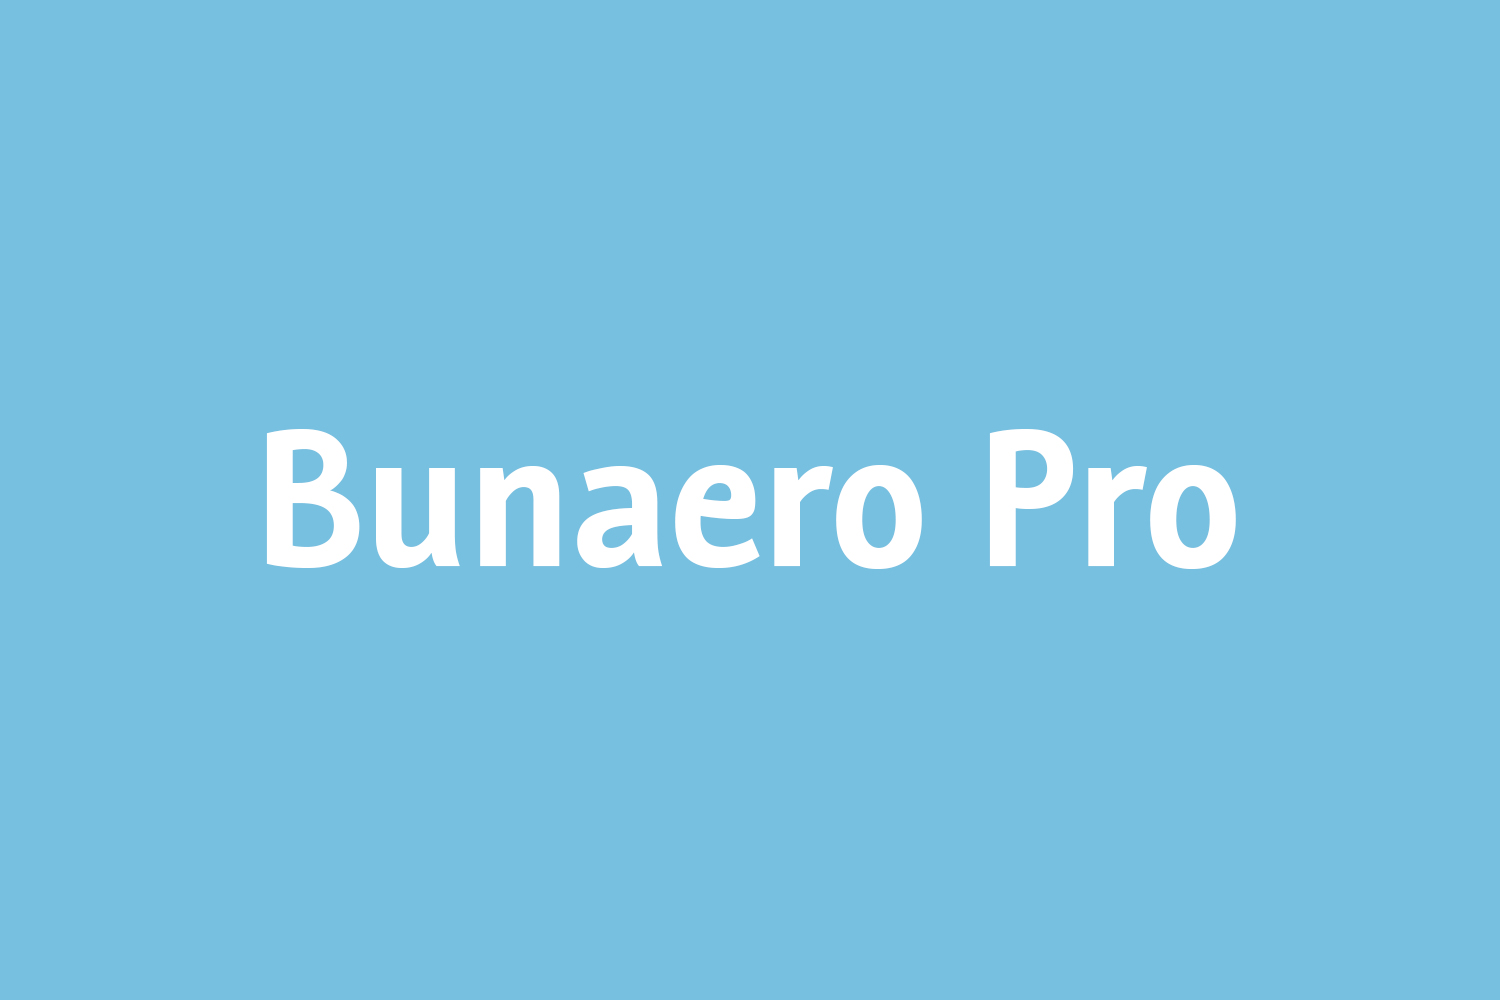 Bunaero Pro